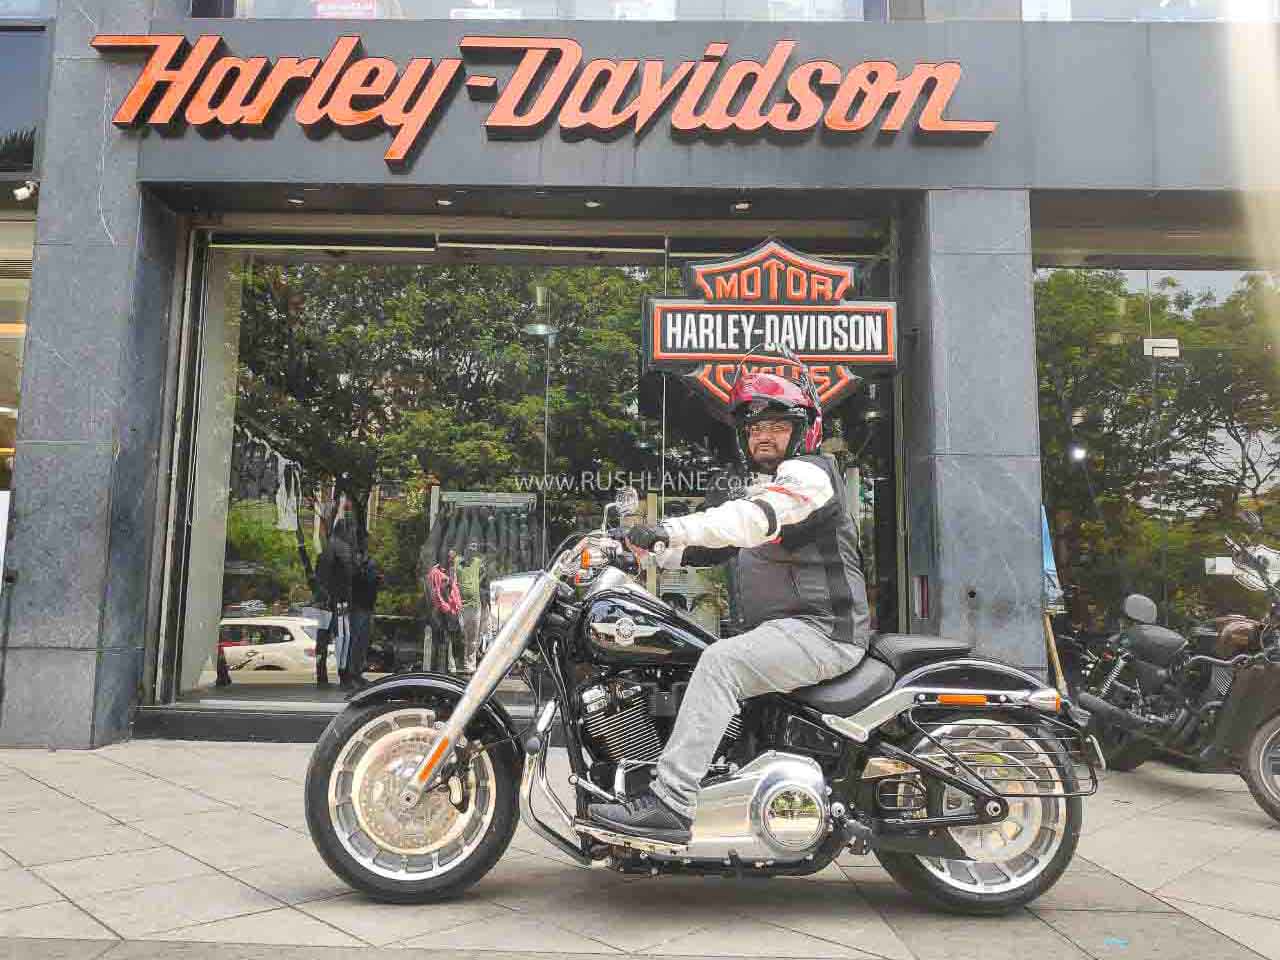 Hero Reveals Harley Davidson India Lineup - New Price List April 2021